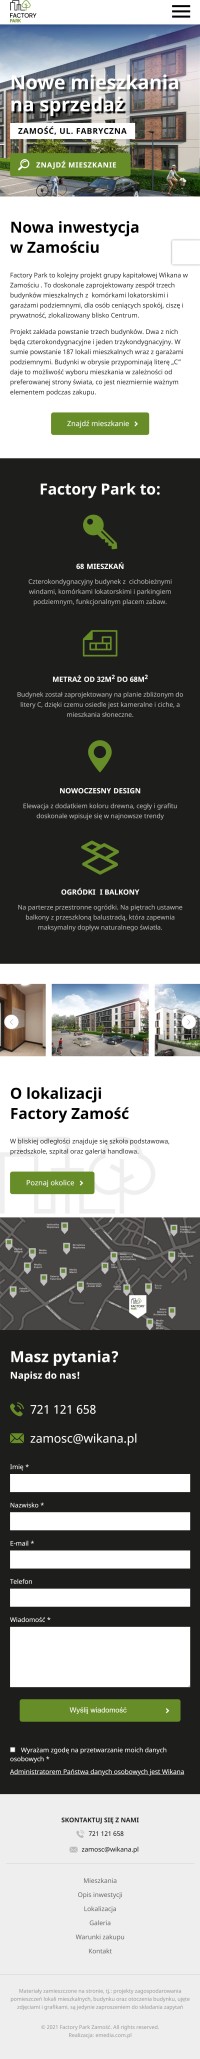 Strona internetowa factoryparkzamosc.pl - zrzut mobile